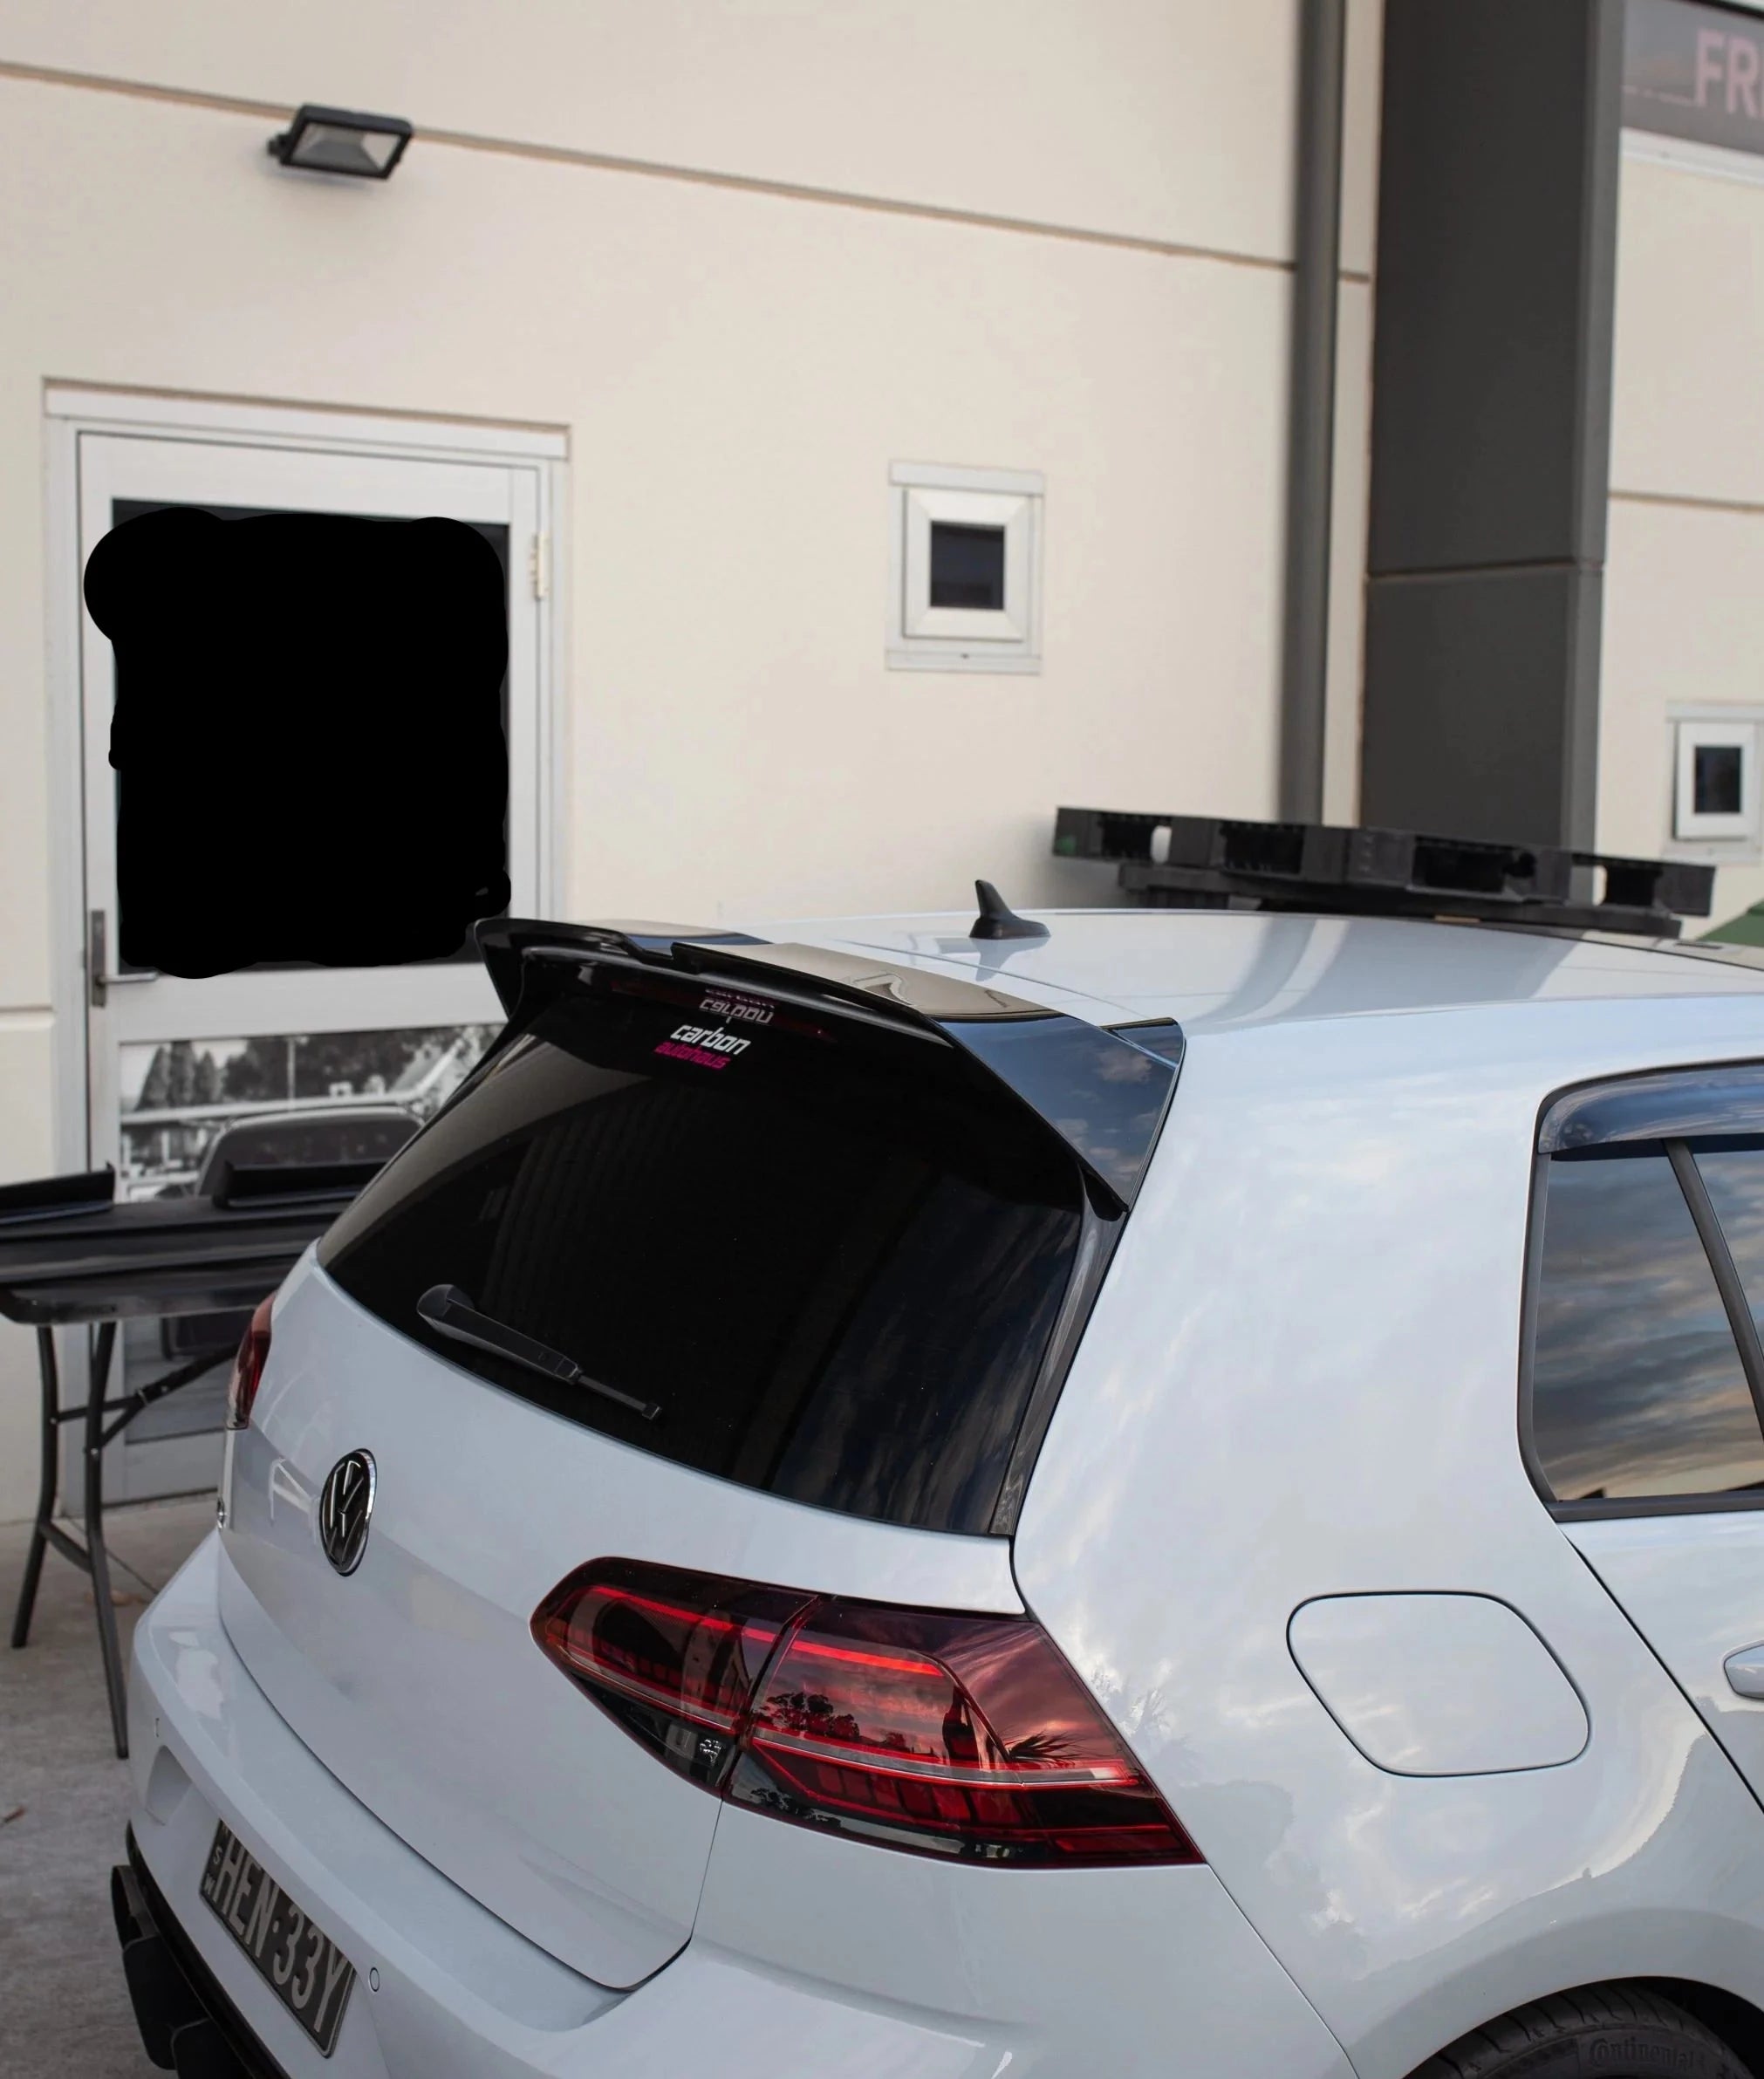 WXHBD Auto Dachspoiler ABS Oettinger Style Heckspoiler für VW